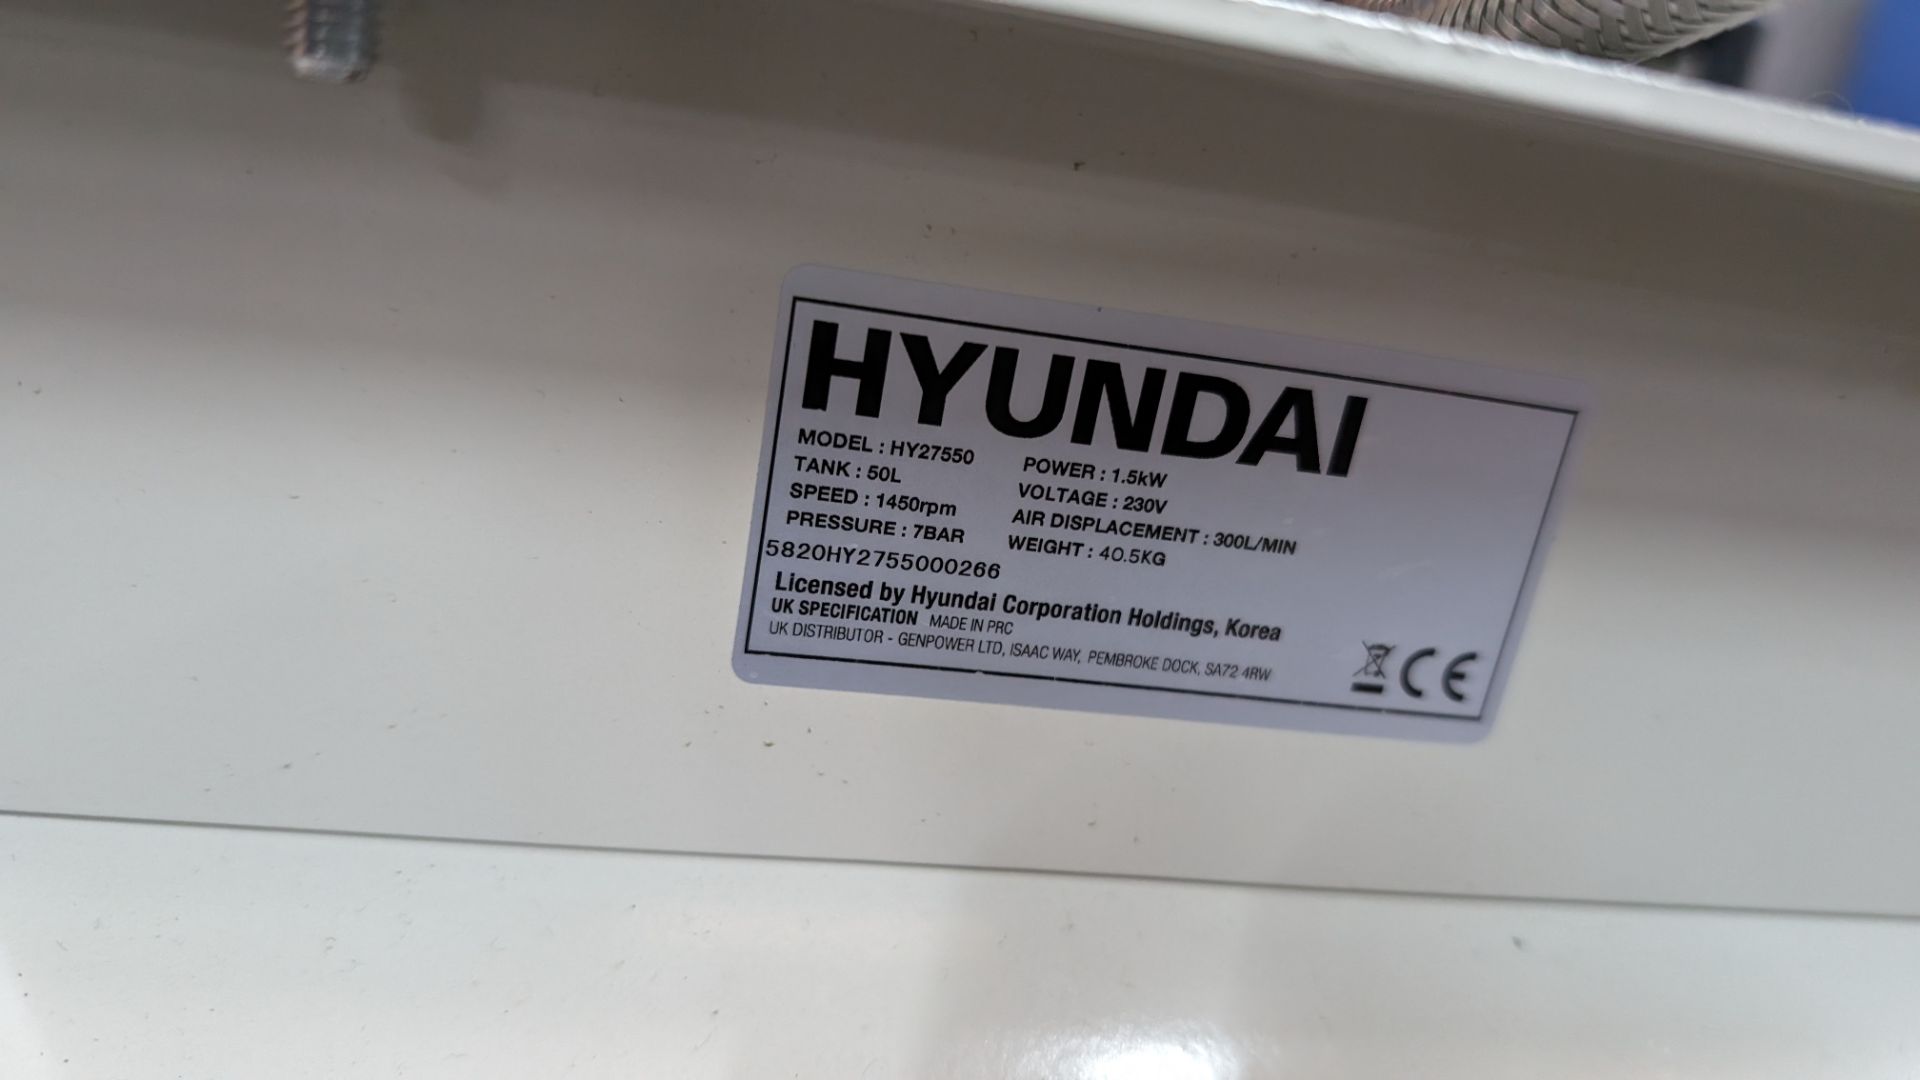 Hyundai super silent oil-free compressor system model HY27550 - Image 4 of 11